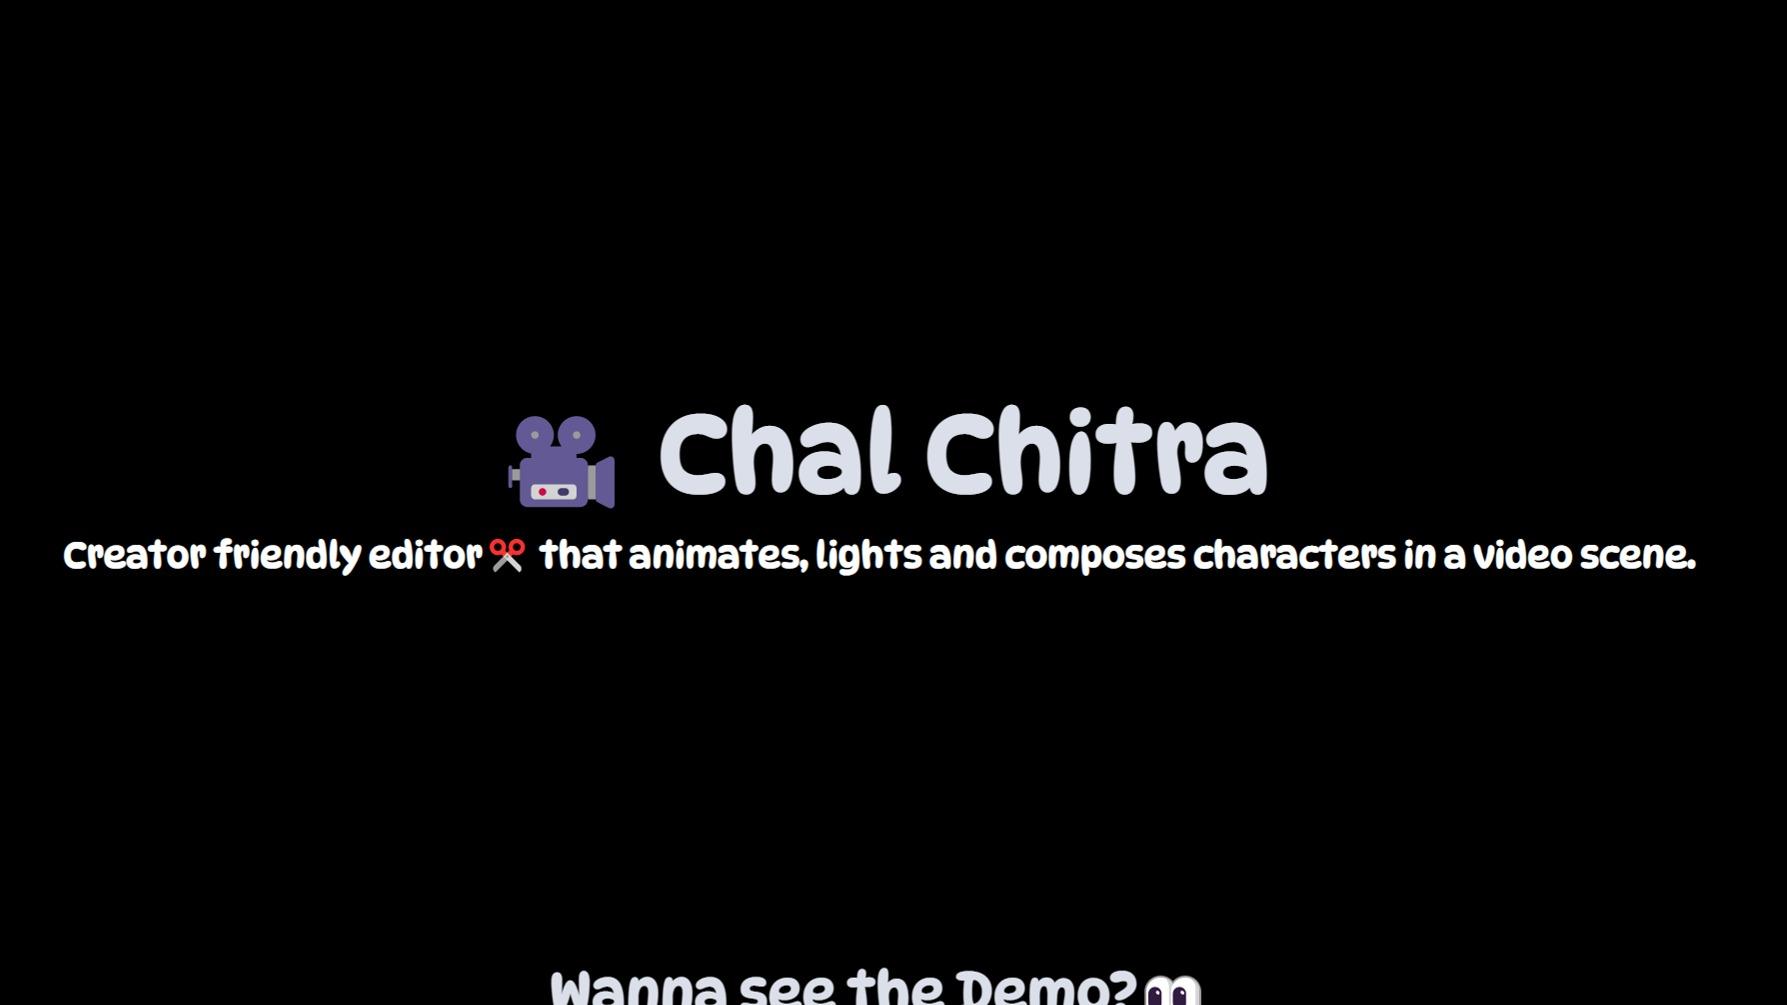 Chal Chitra